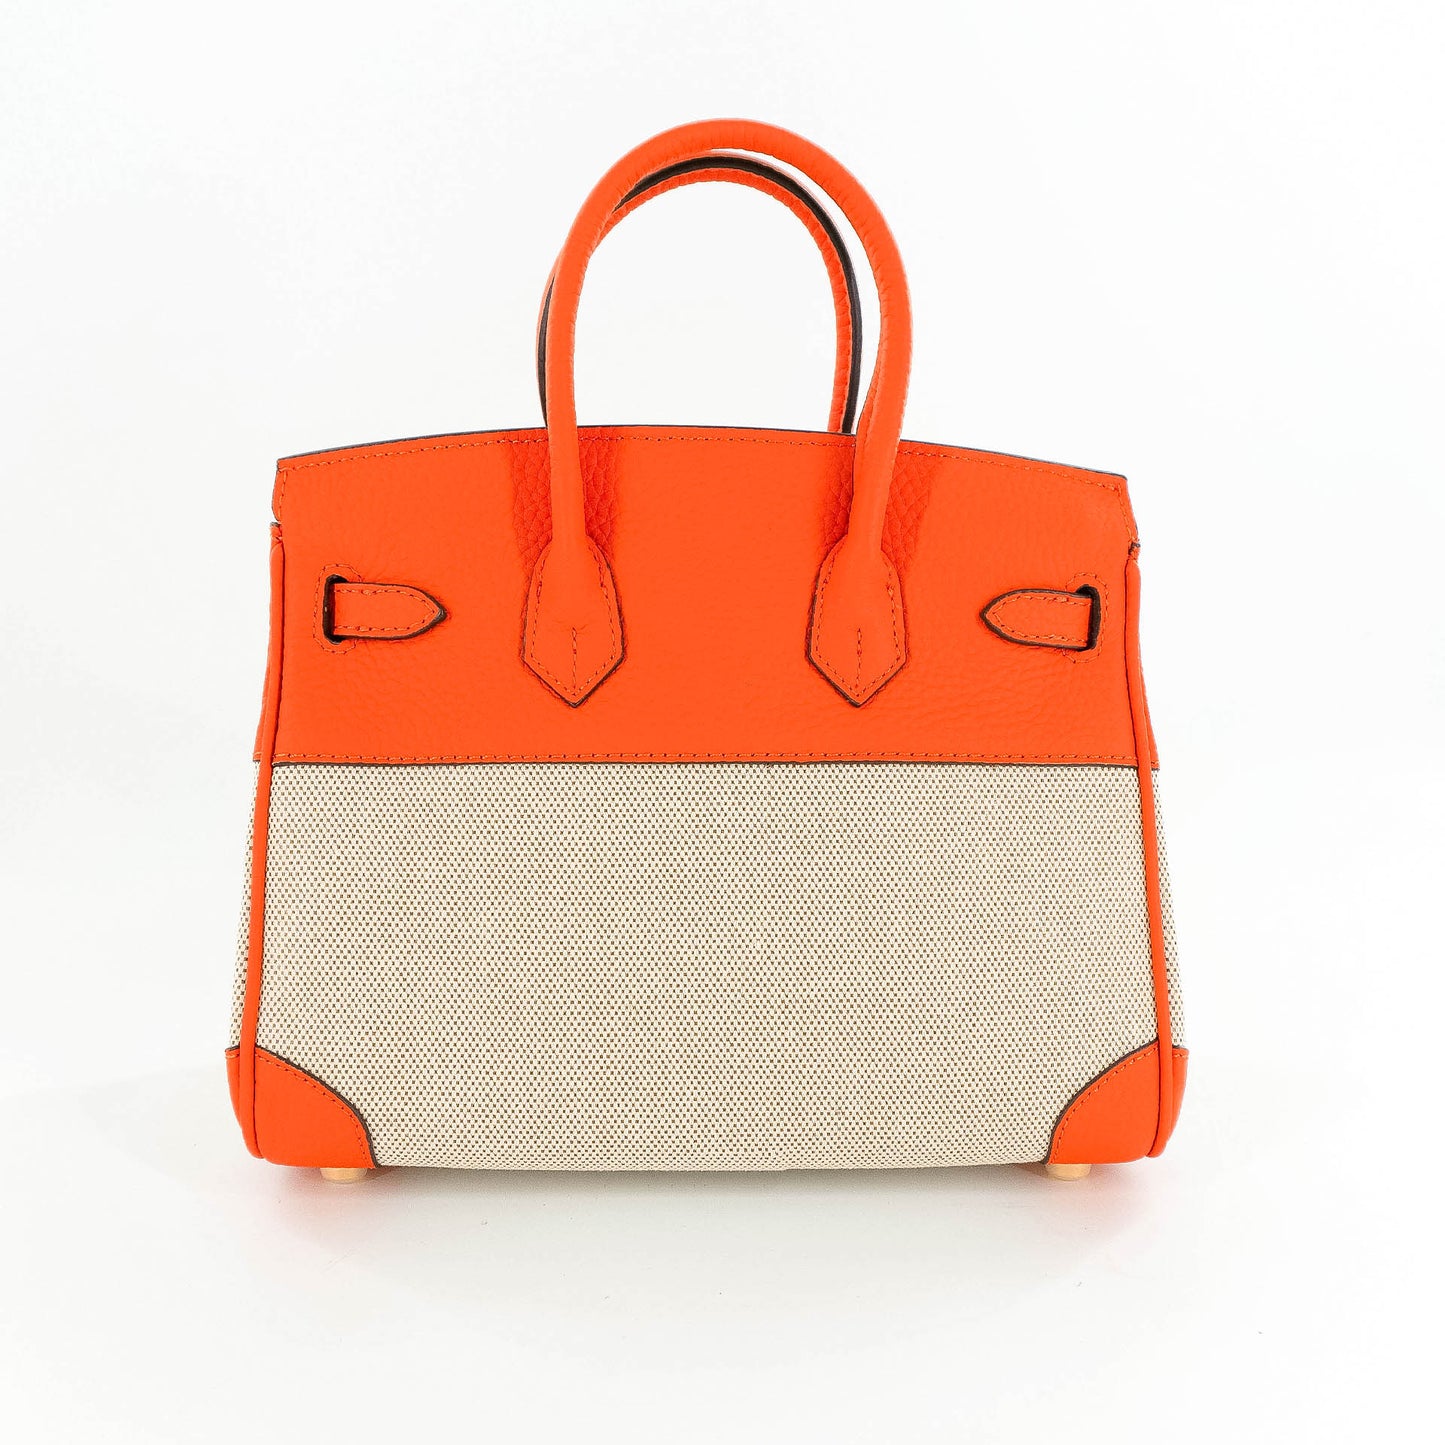 Duchess Handbag in Linen and Orange Leather